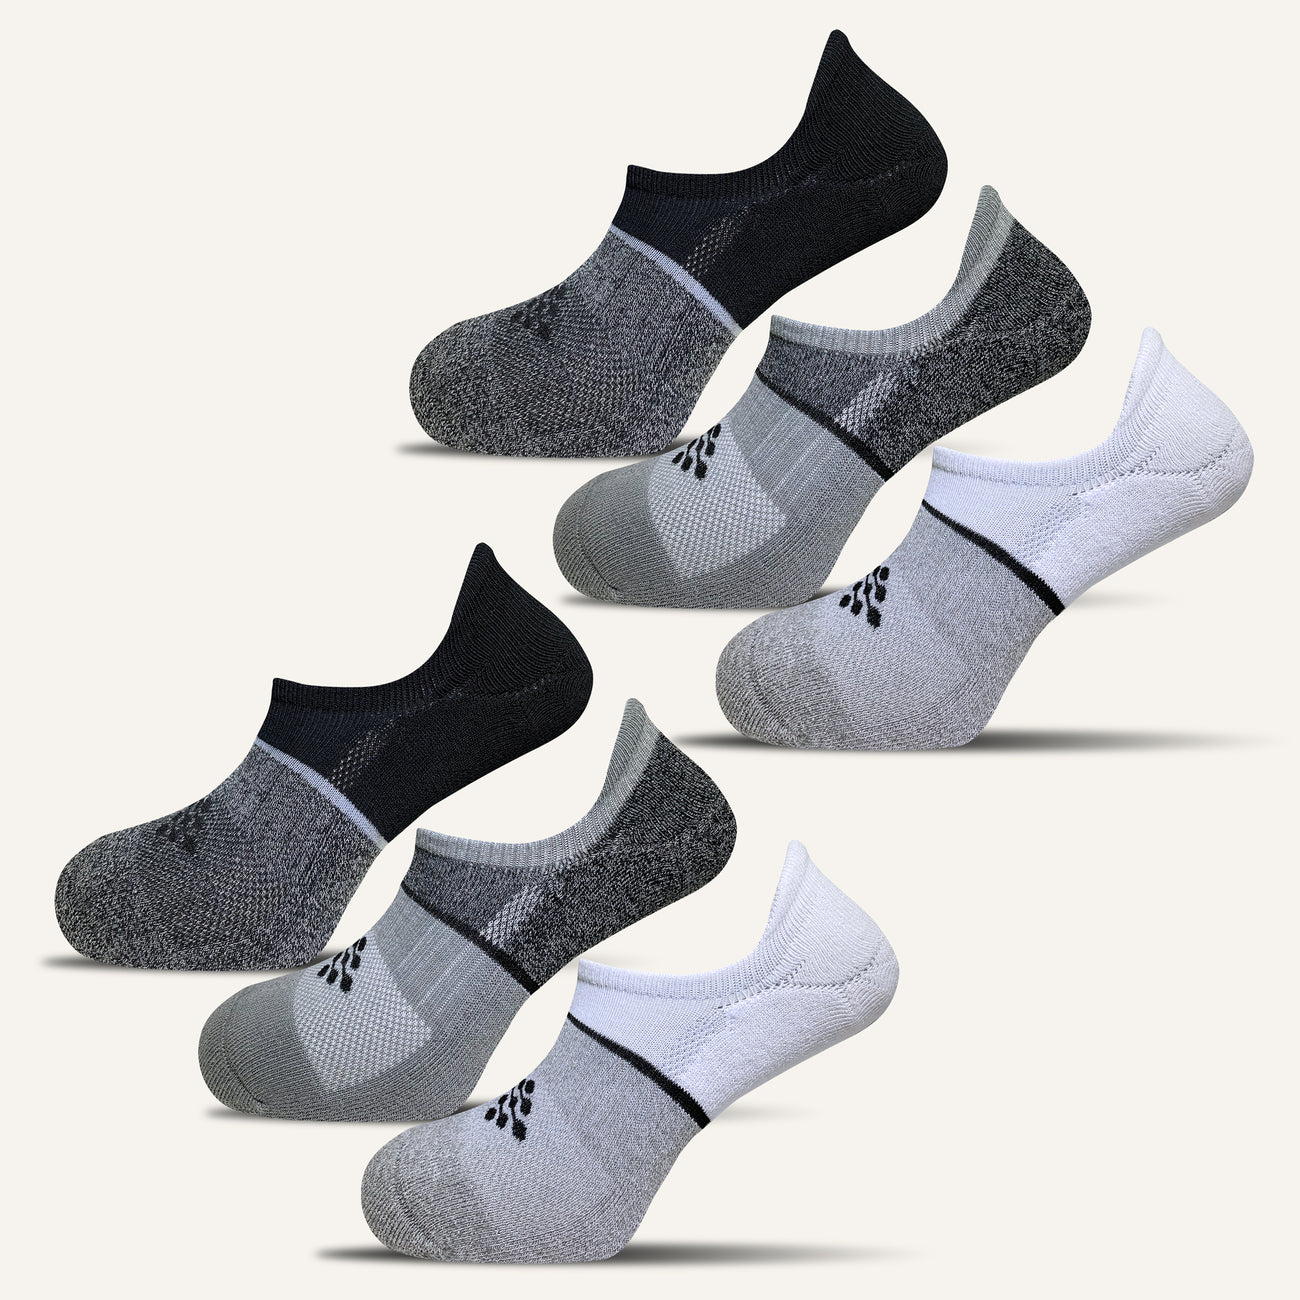 Busy Socks Men's Women's Wool Ankle No Show Tab Socks, Dark Grey,  Large,6-Pack 